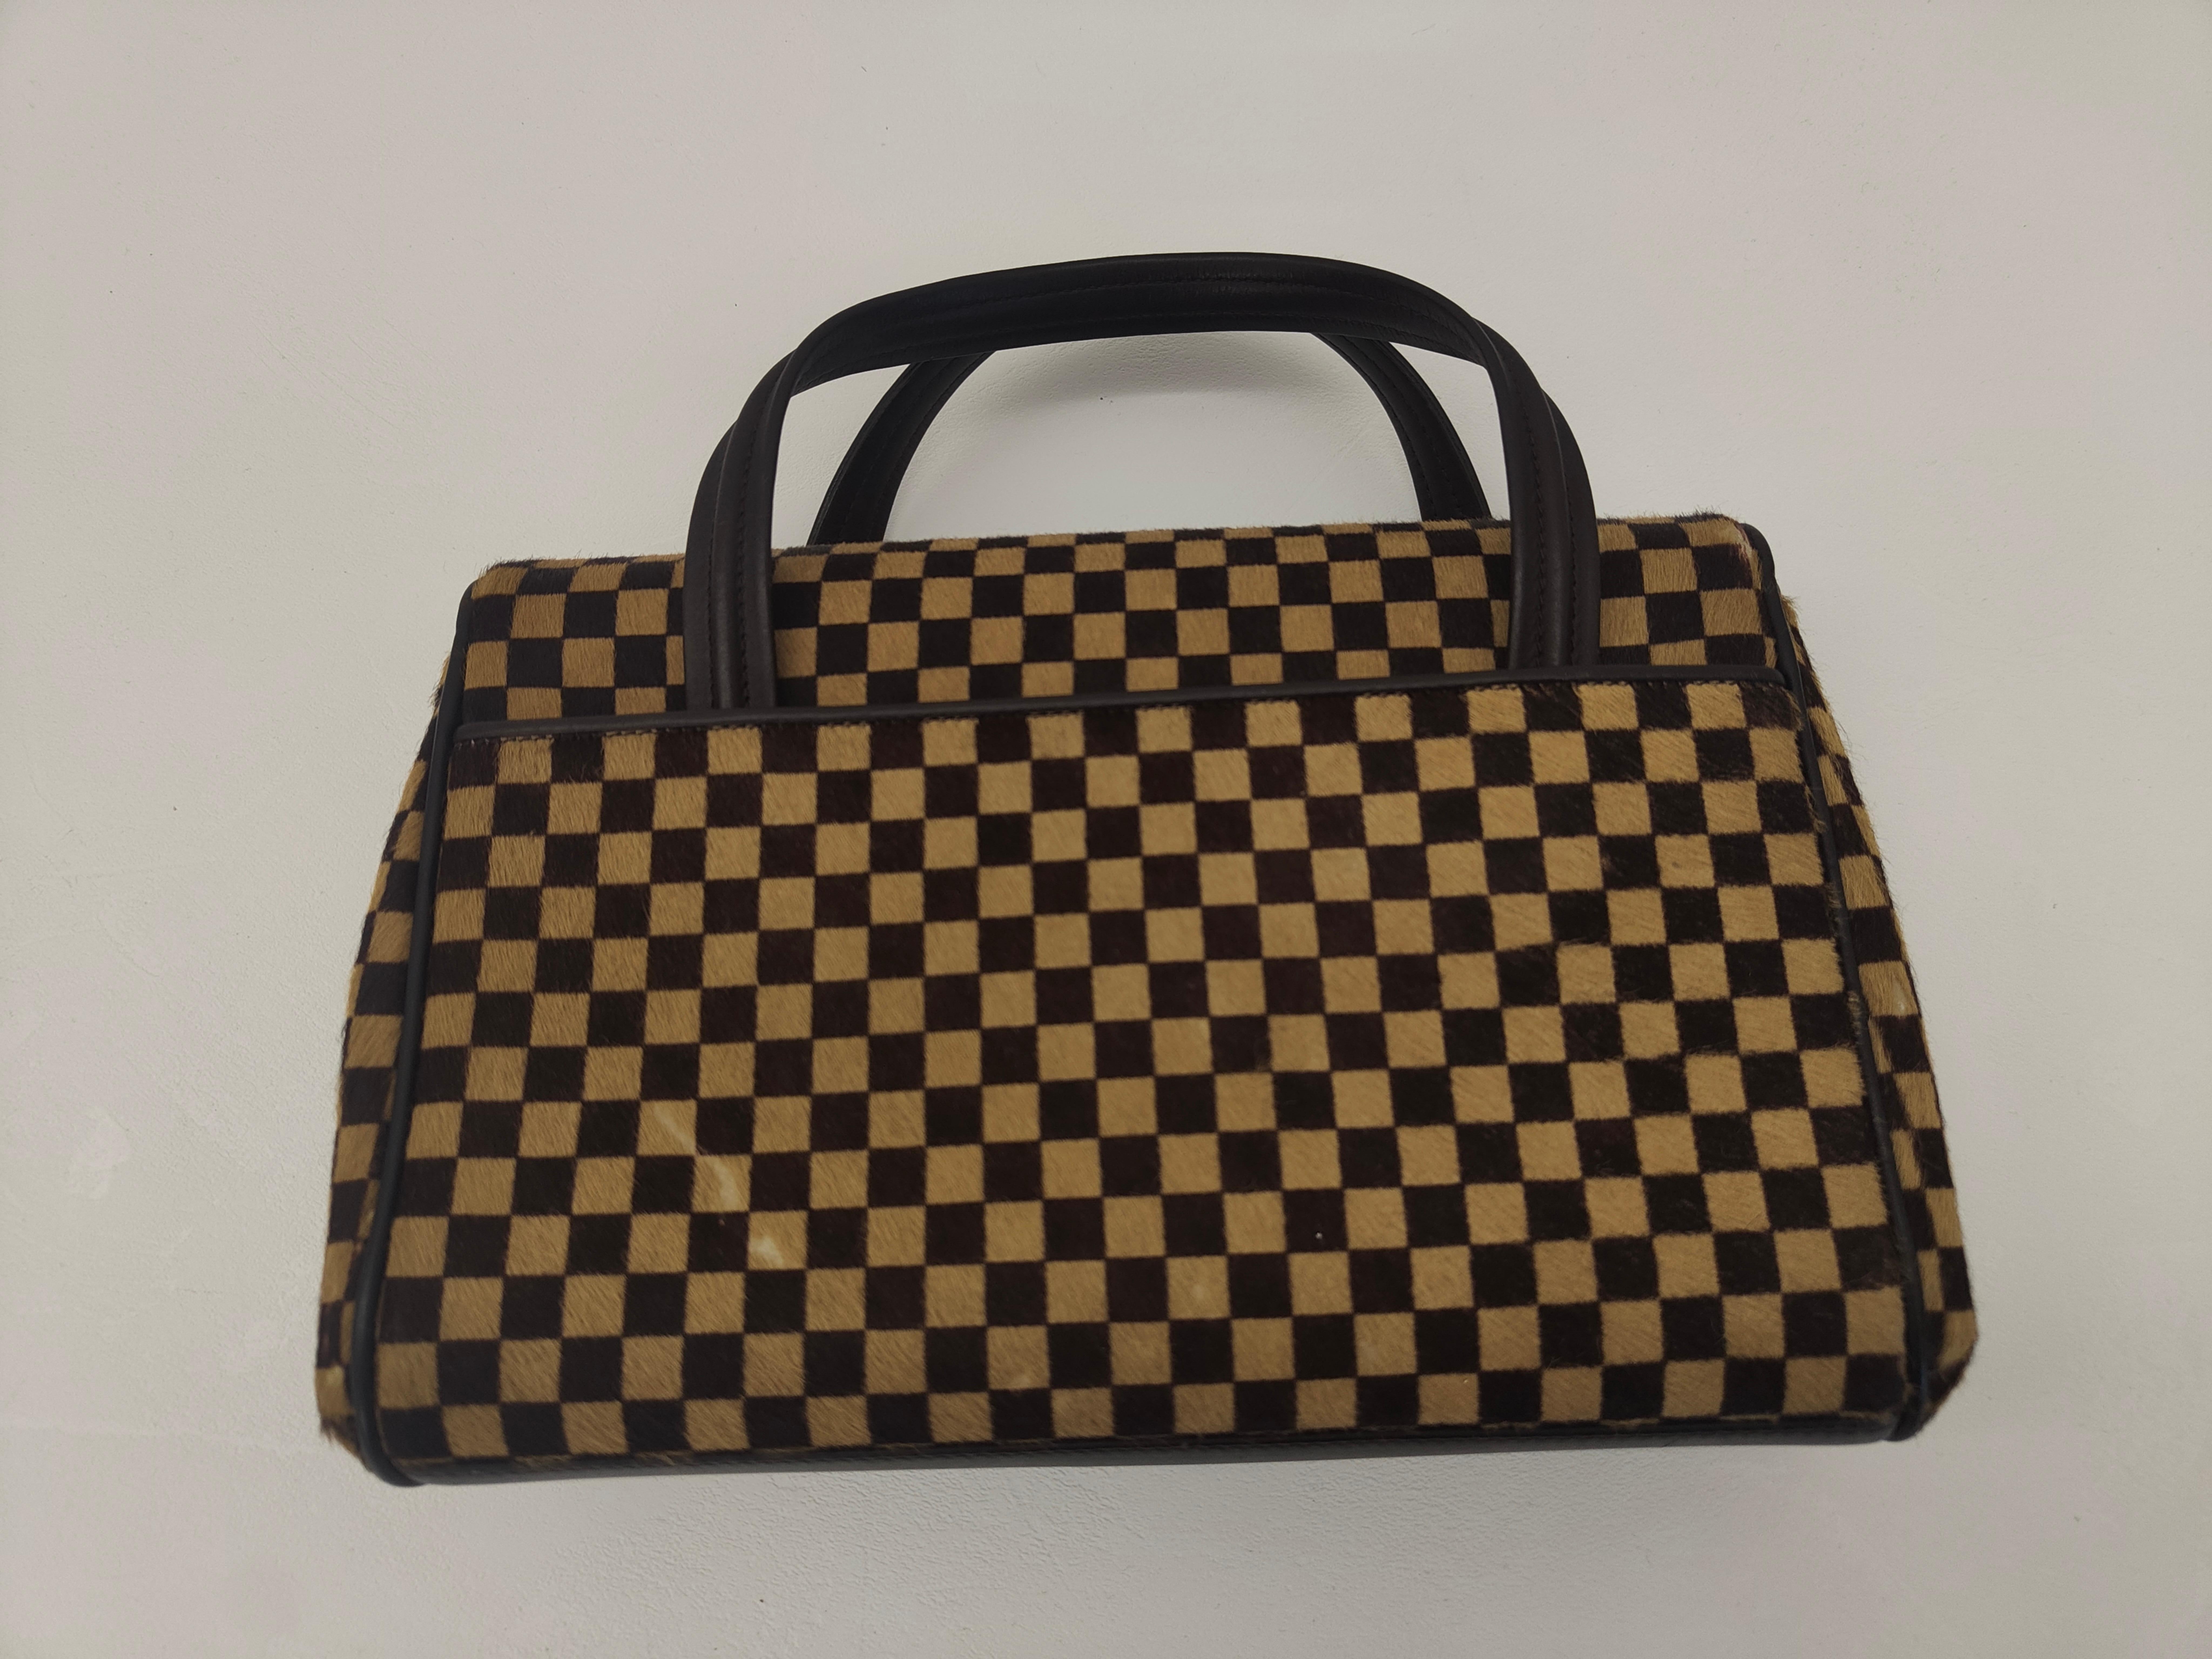 Louis Vuitton Sauvage denim handbag
Louis Vuitton by Marc Jacobs damier ponyhair hand bag
